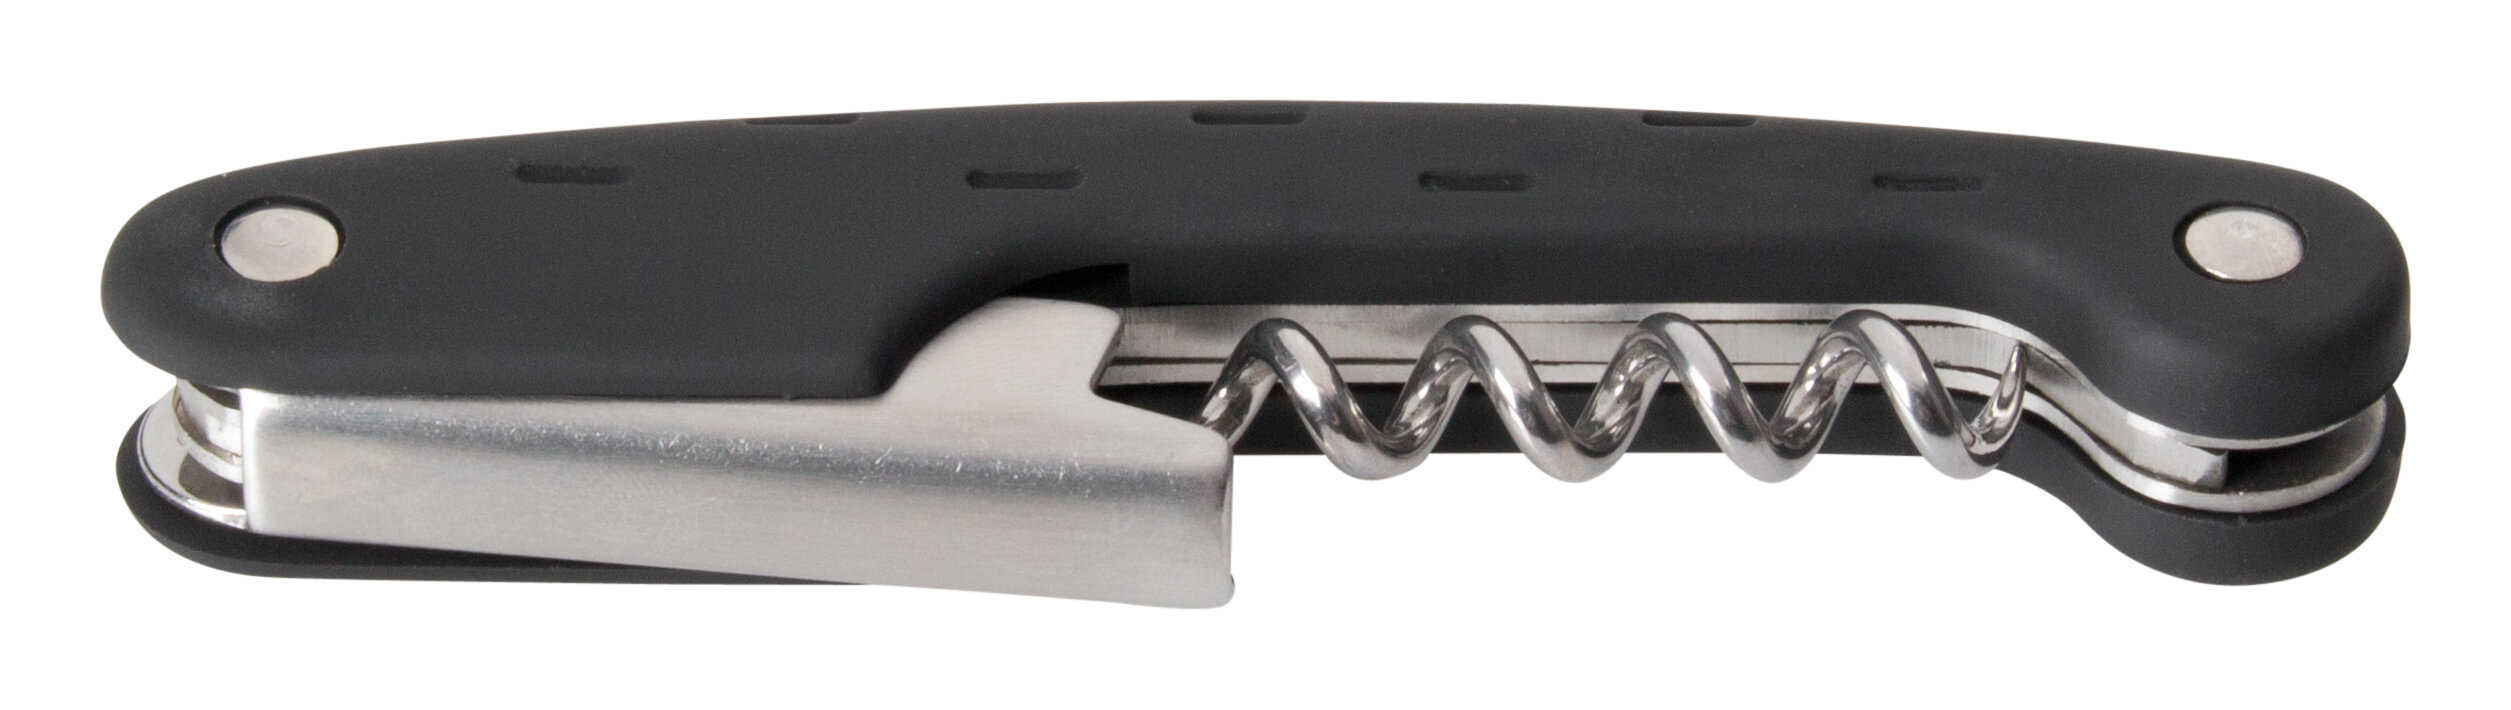 Corkscrew - rubberised handle